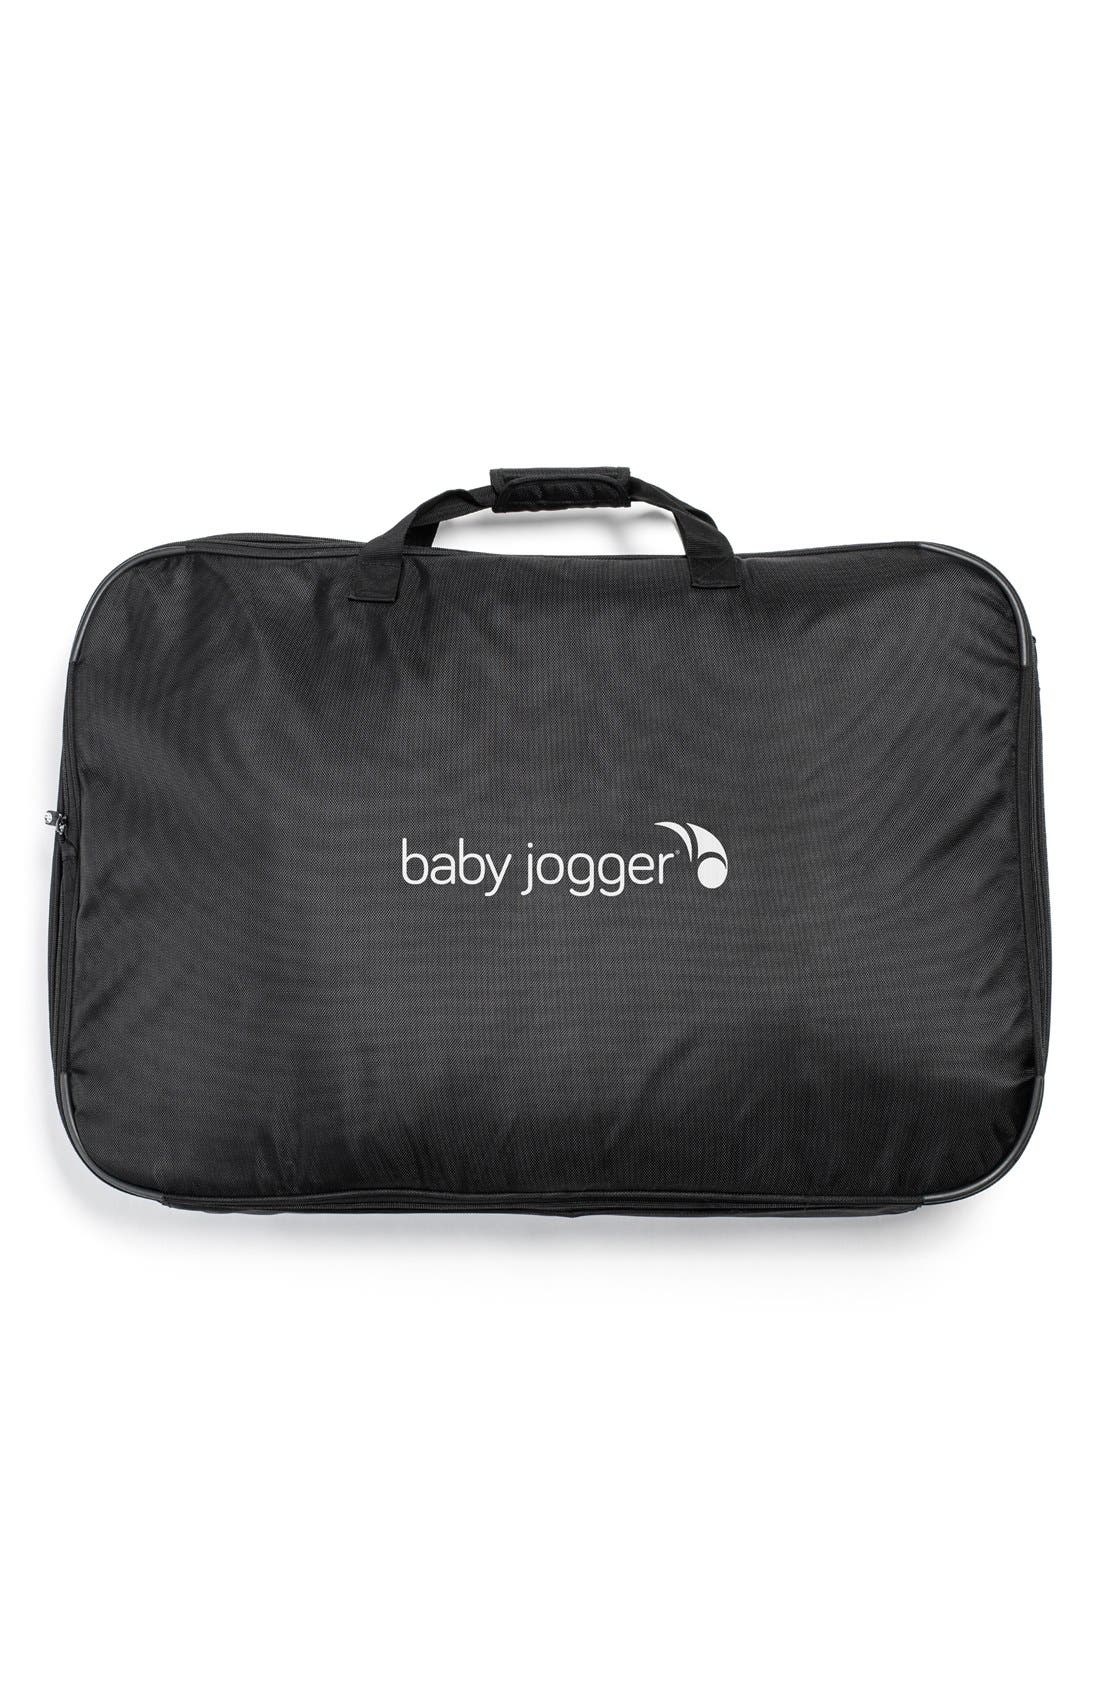 baby jogger city mini travel bag sale